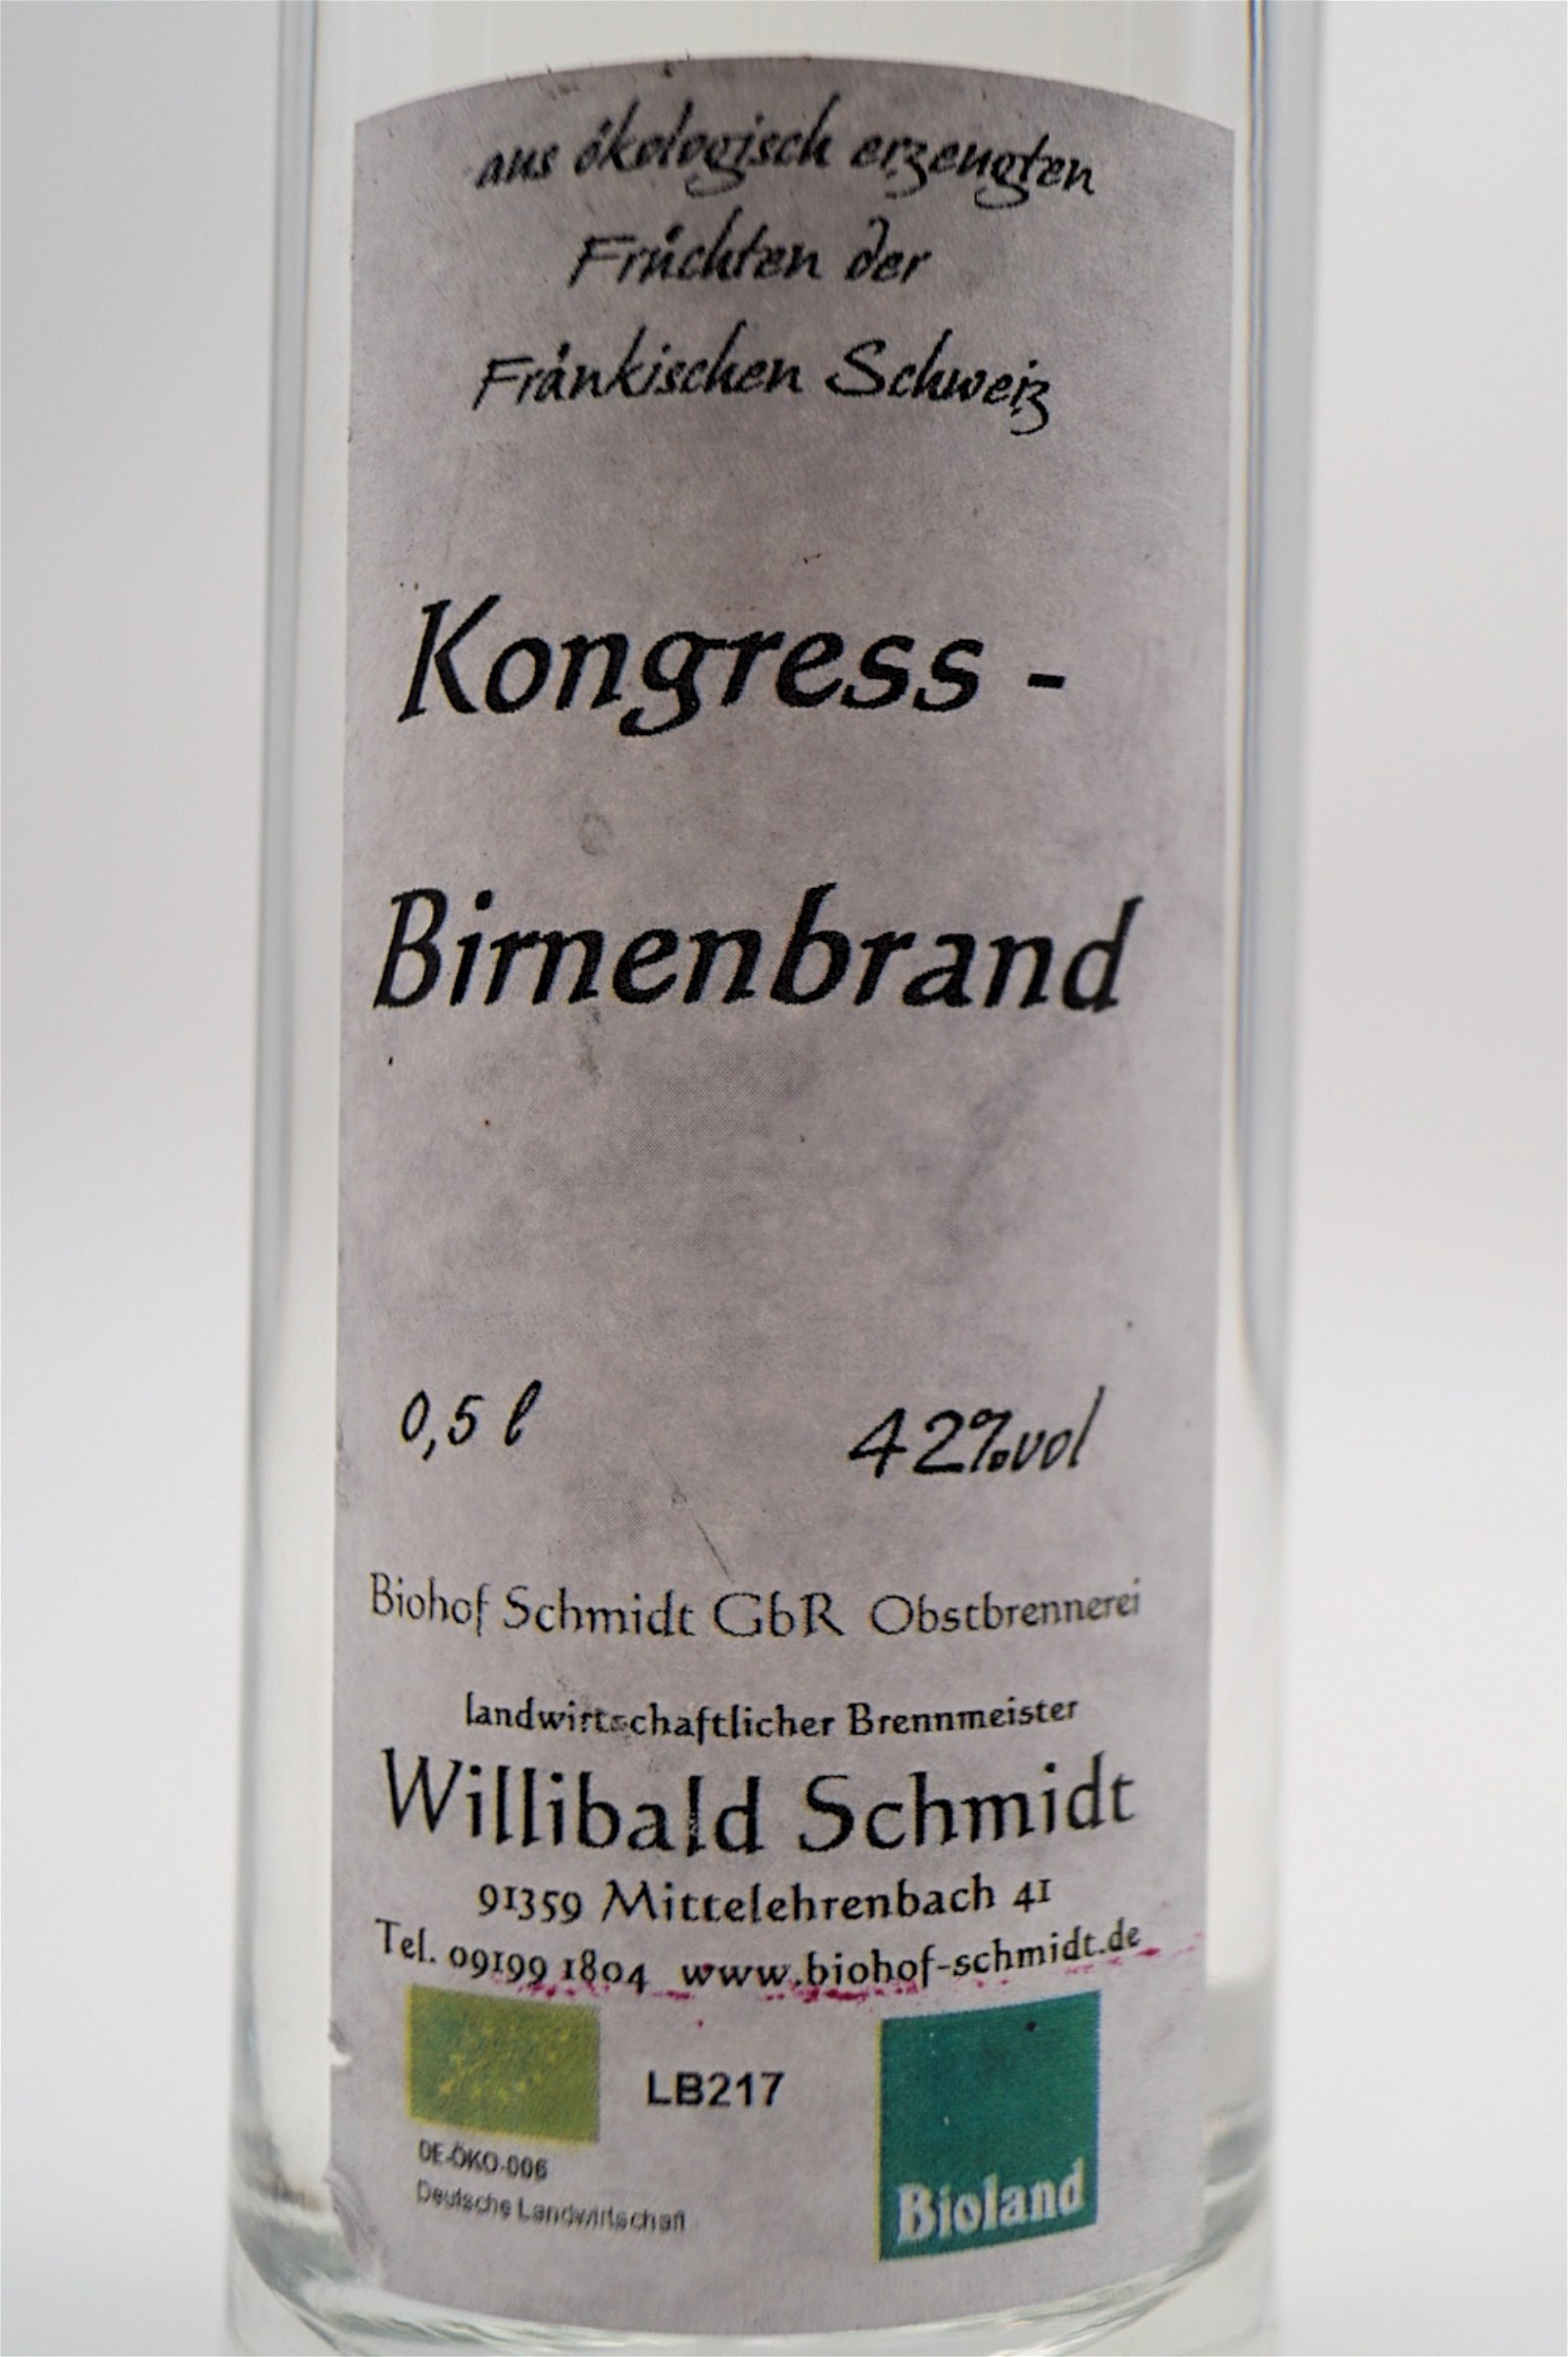 Obstbrennerei Biohof Schmidt Bio Kongress-Birnenbrand